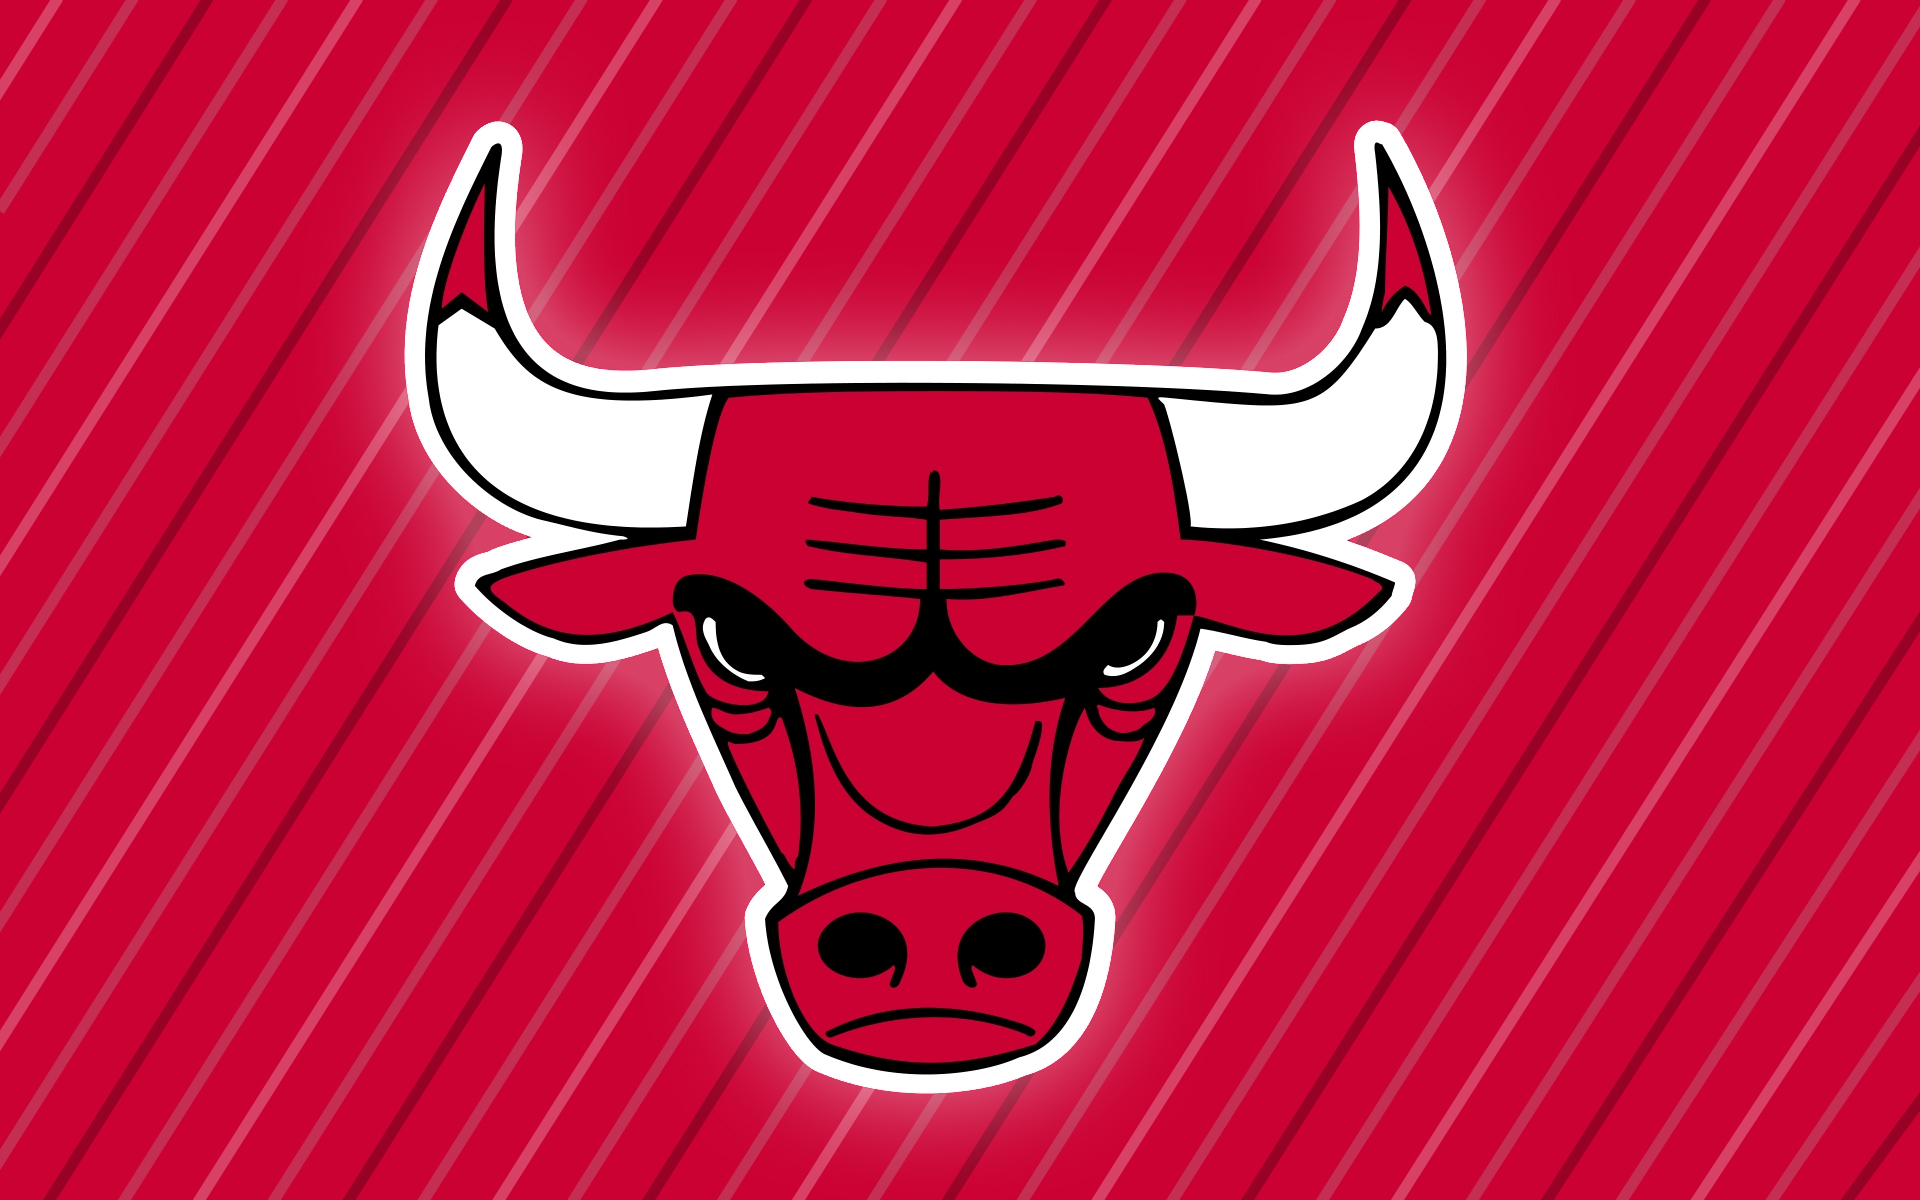 Chicago Bulls Wallpaper Background